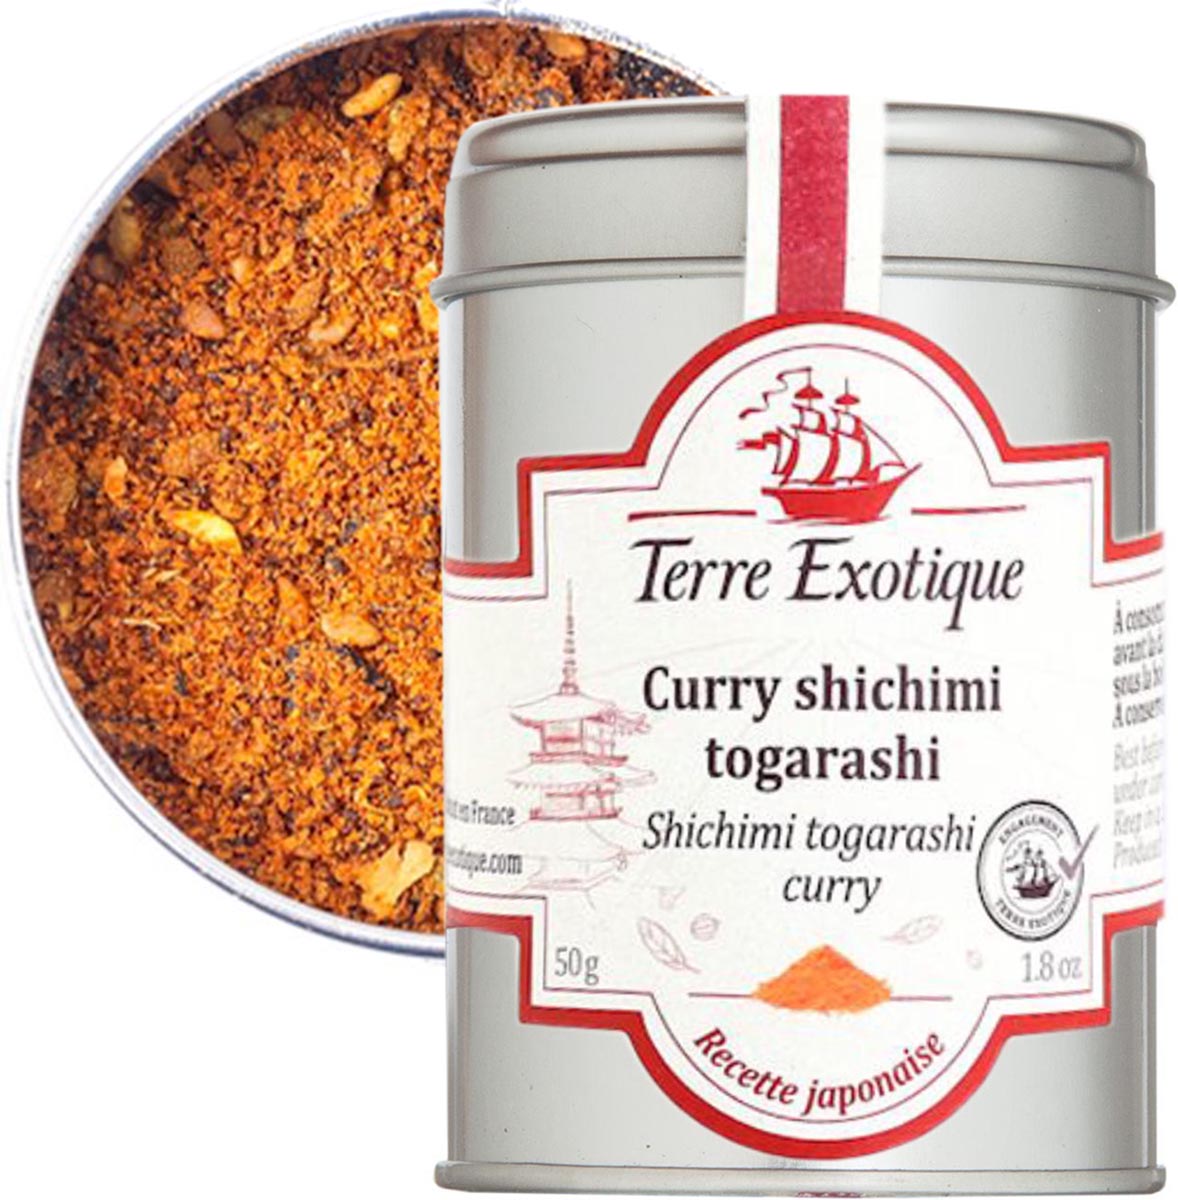 Terre Exotique Curry shichimi togarashi